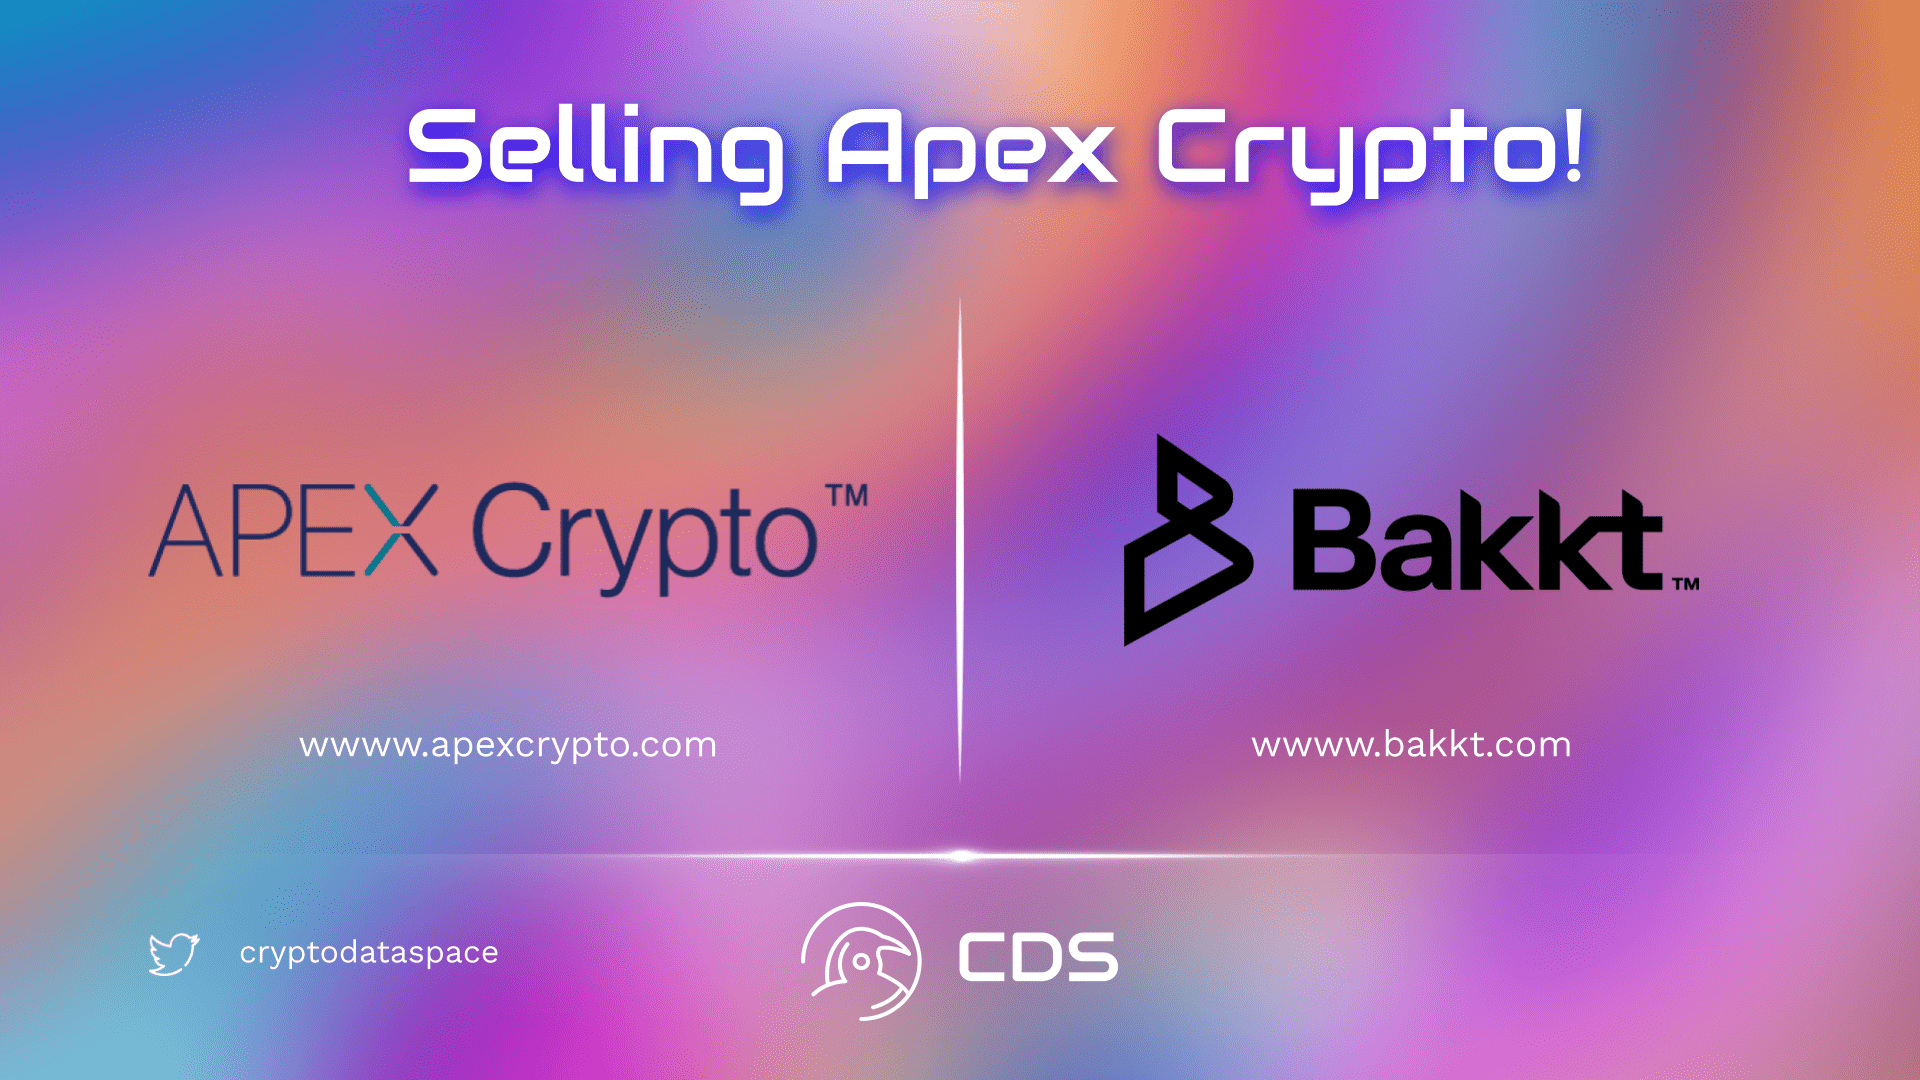 Selling Apex Crypto!